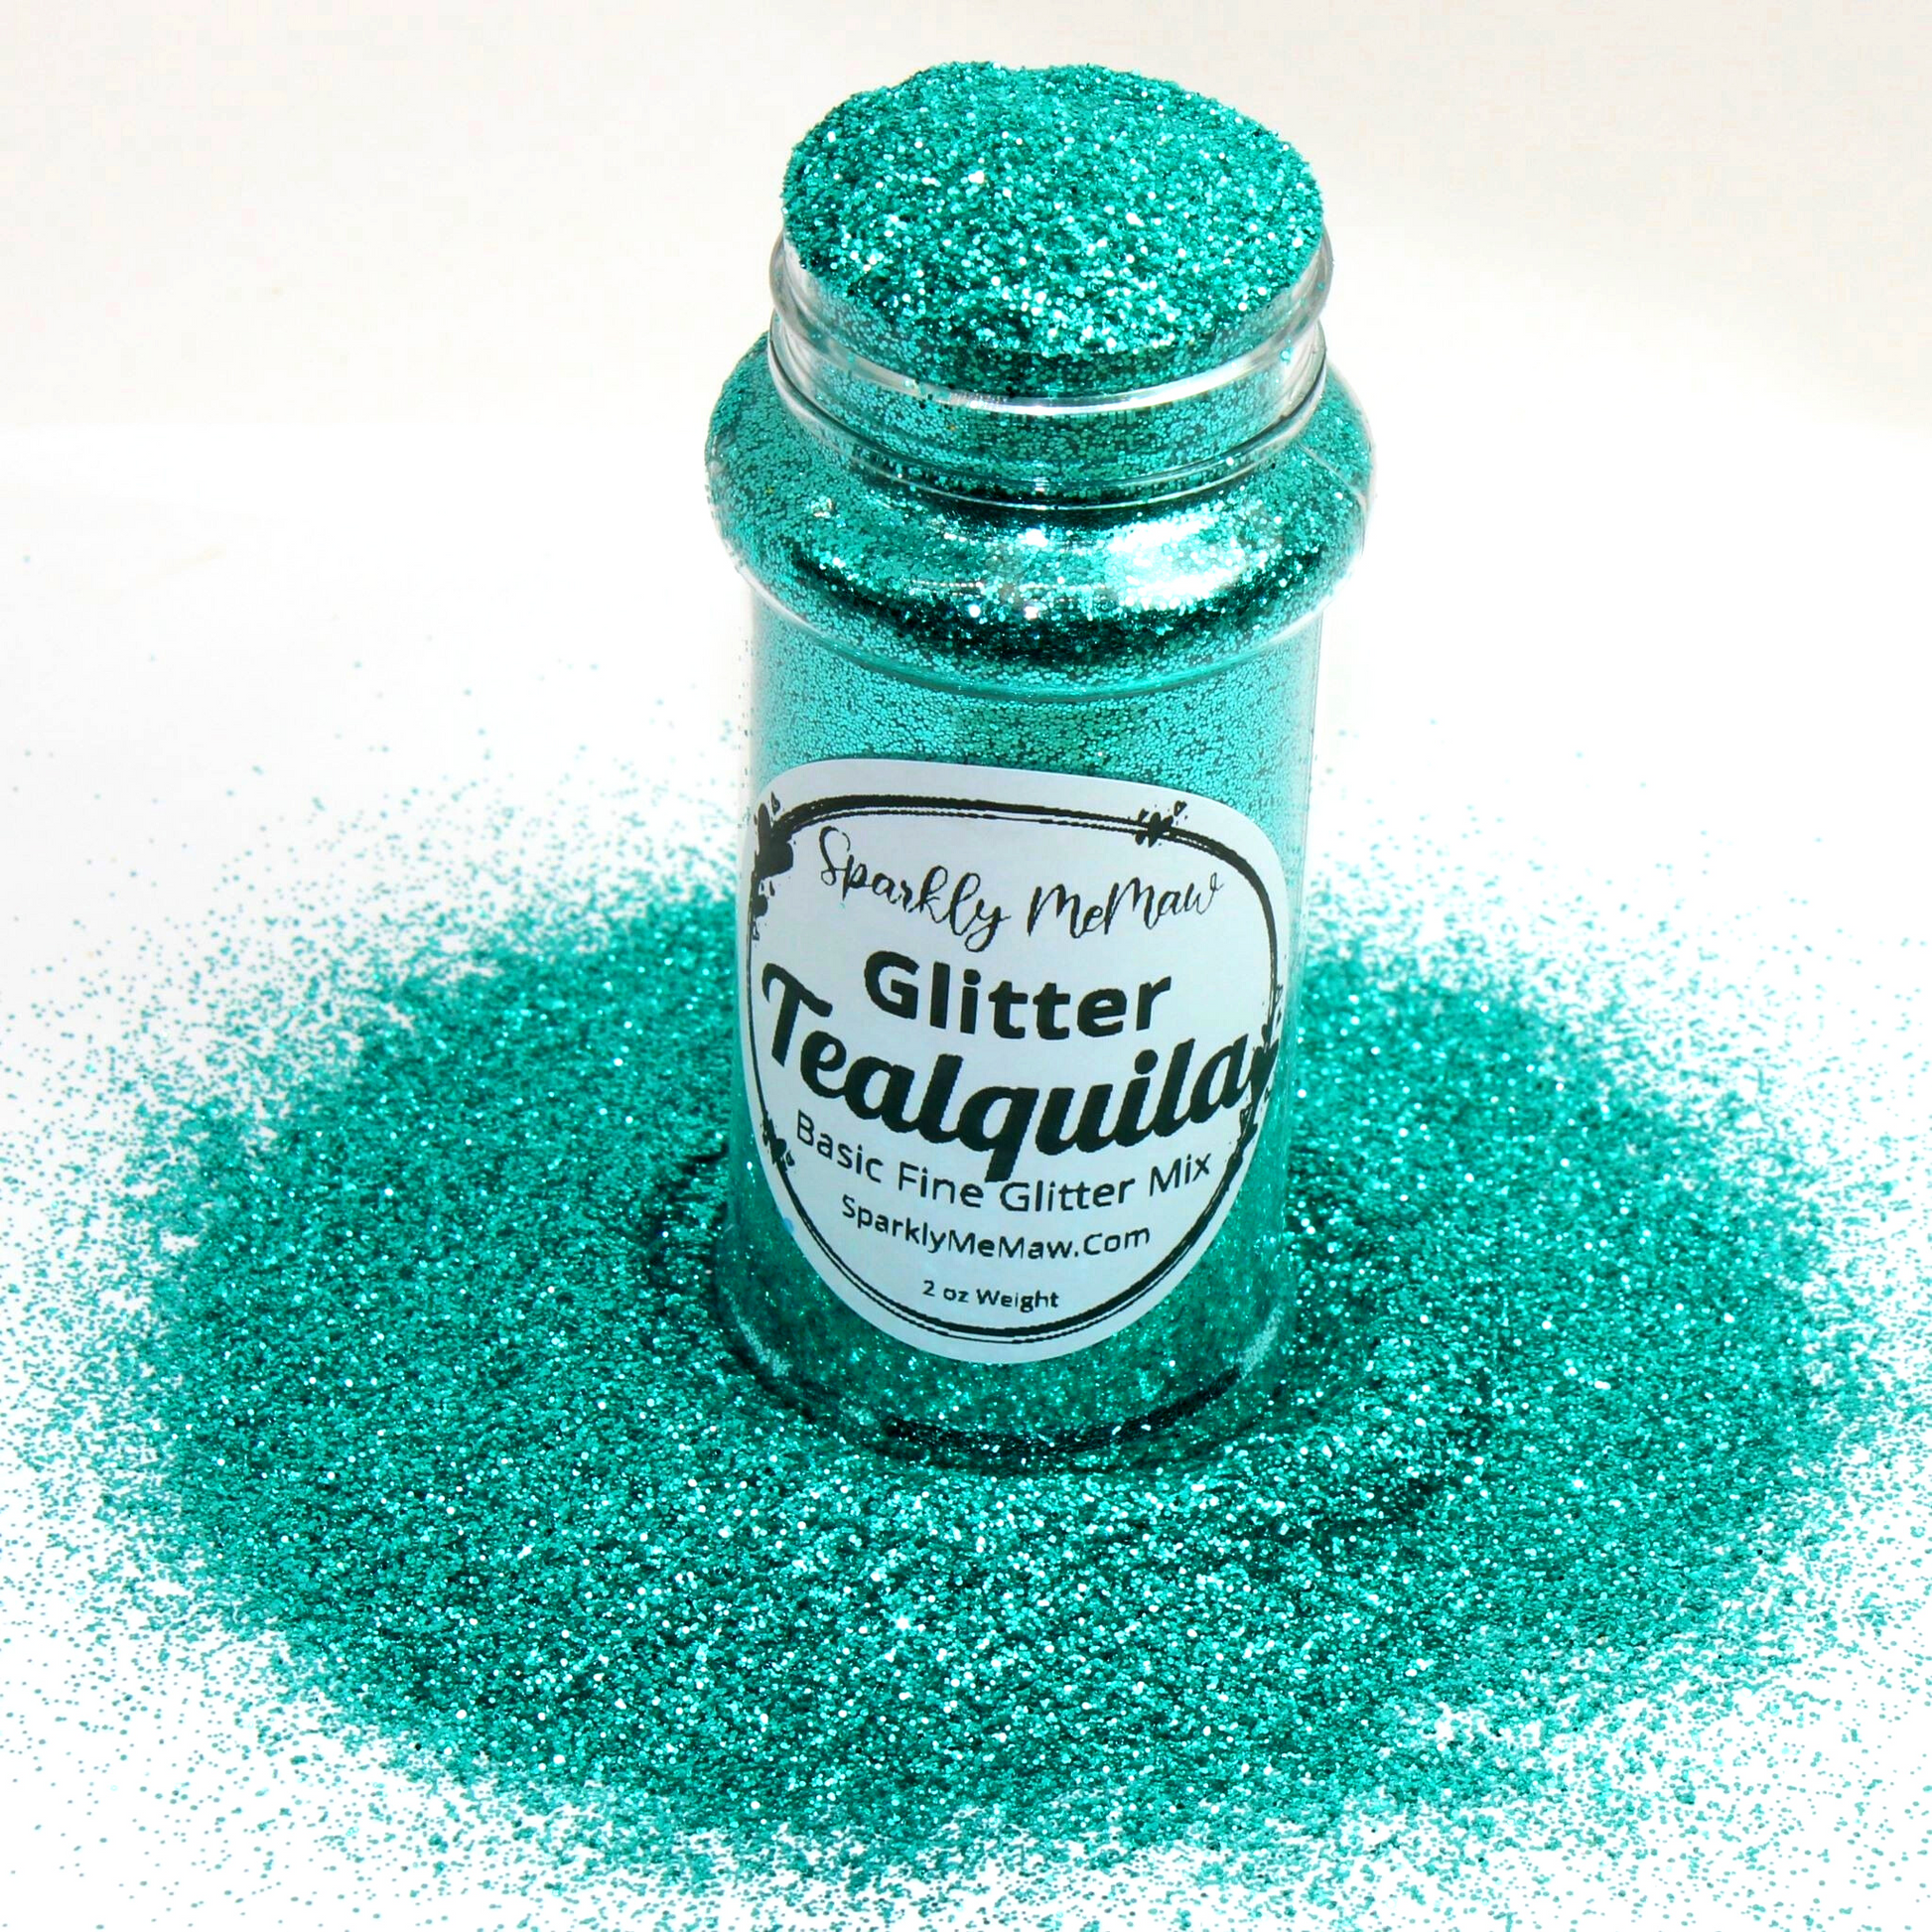 Tealquila Custom Fine Metallic Glitter Mix – Sparkly MeMaw LLC